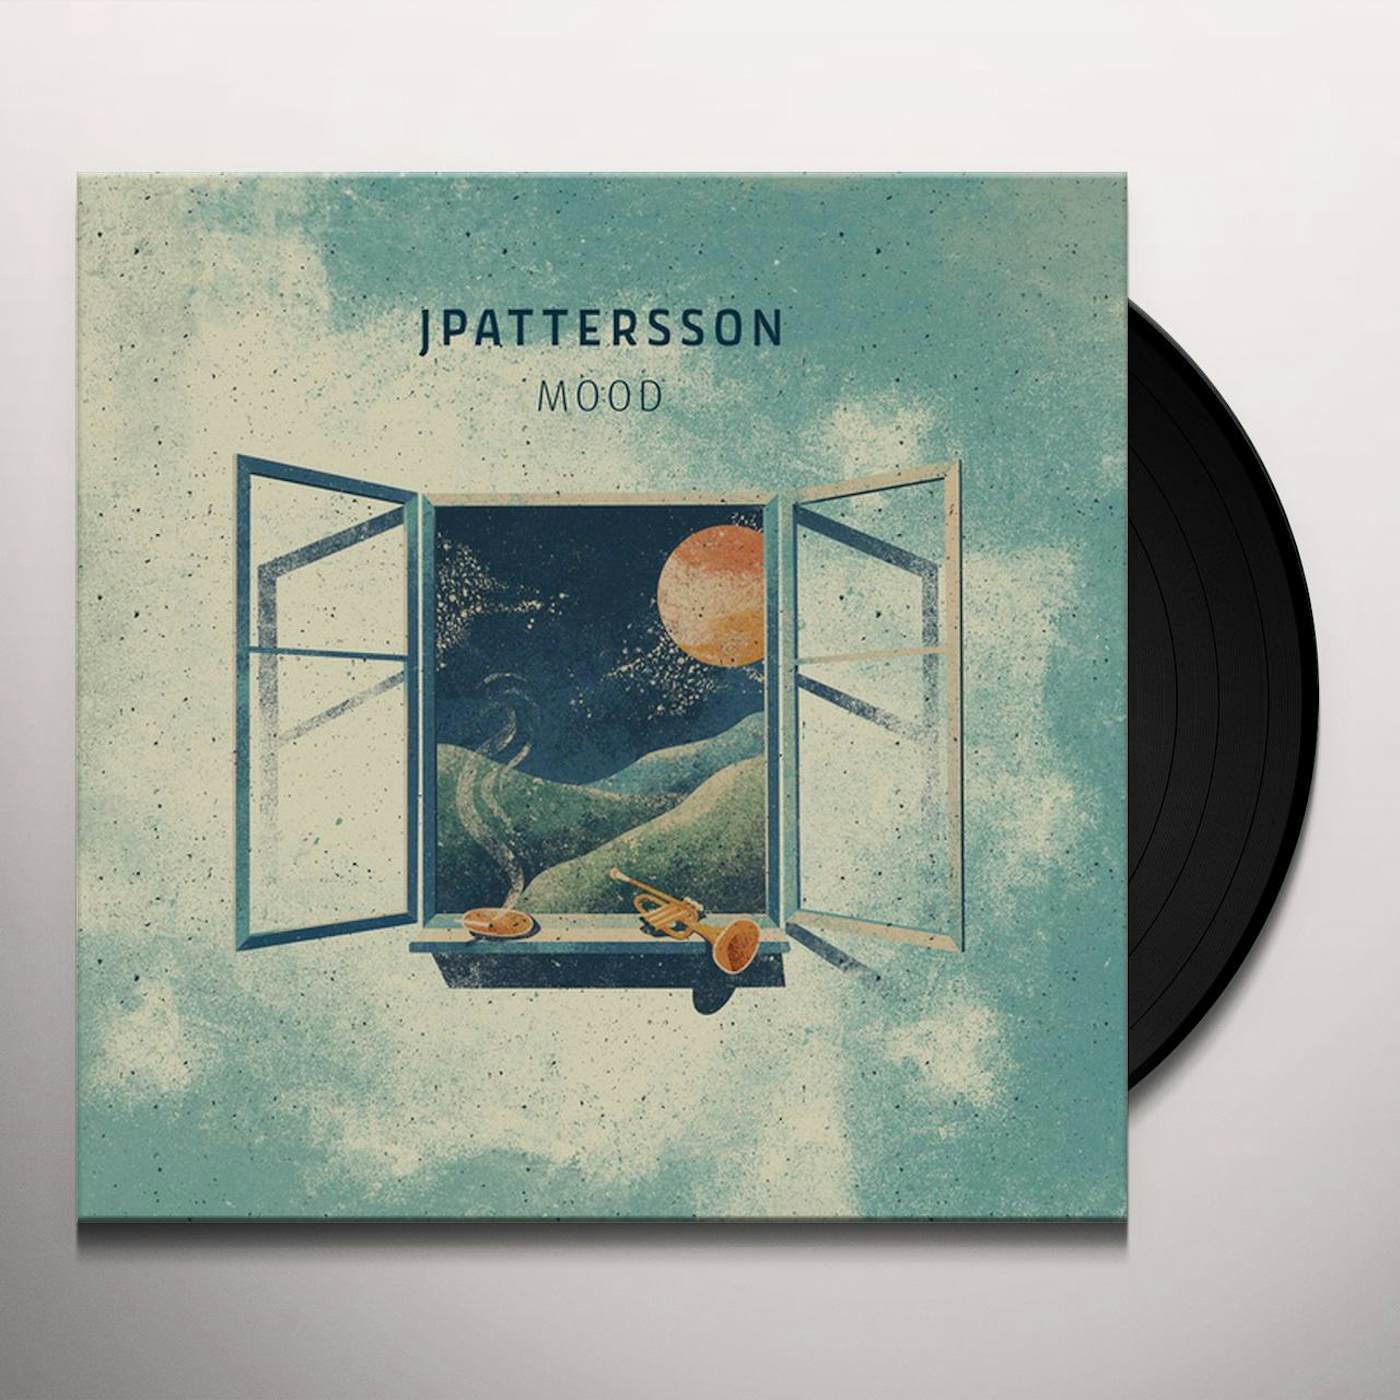 JPattersson Mood Vinyl Record